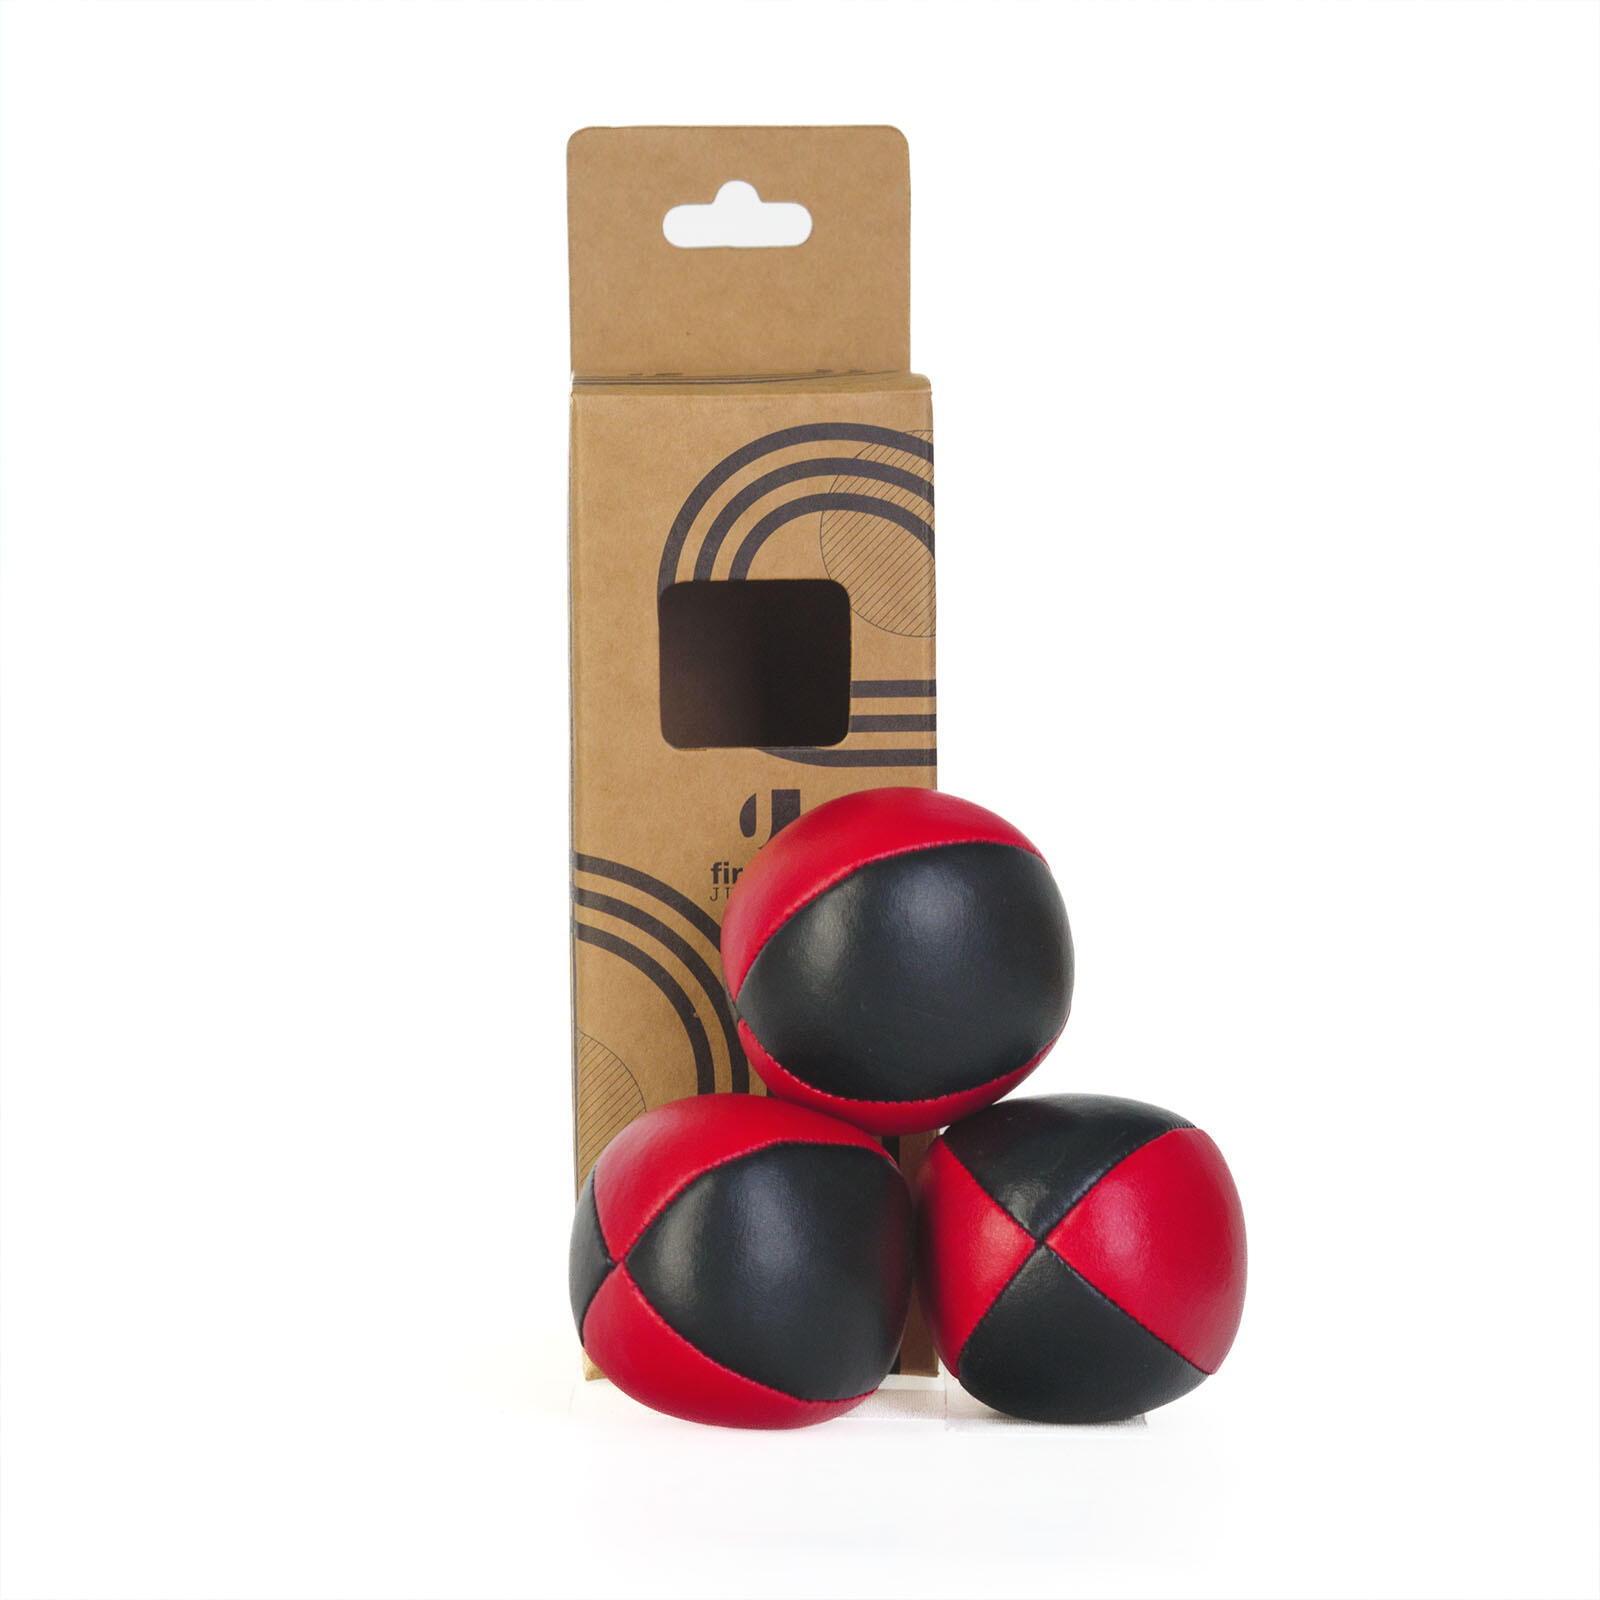 FIRETOYS Firetoys Juggling - 120g Thud - Set of 3x Juggling Balls